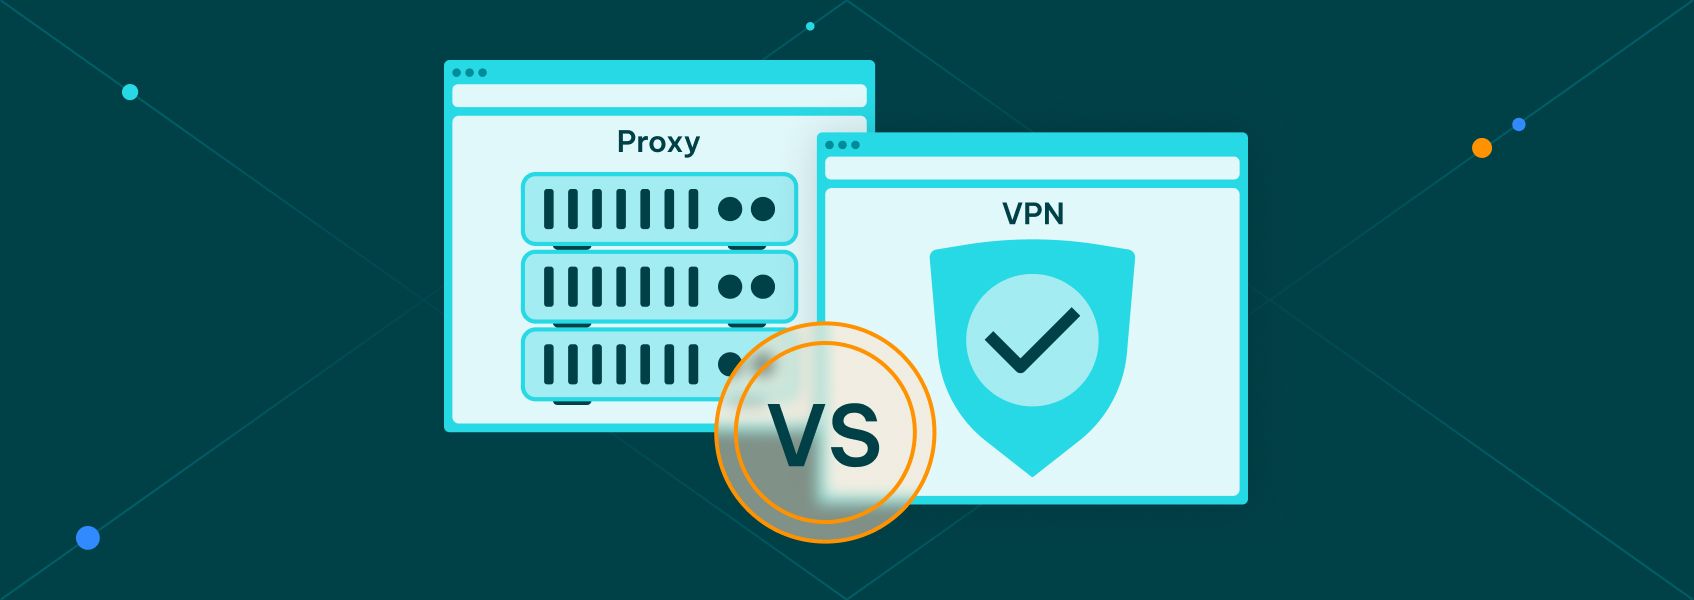 proxy vs. vpn featured